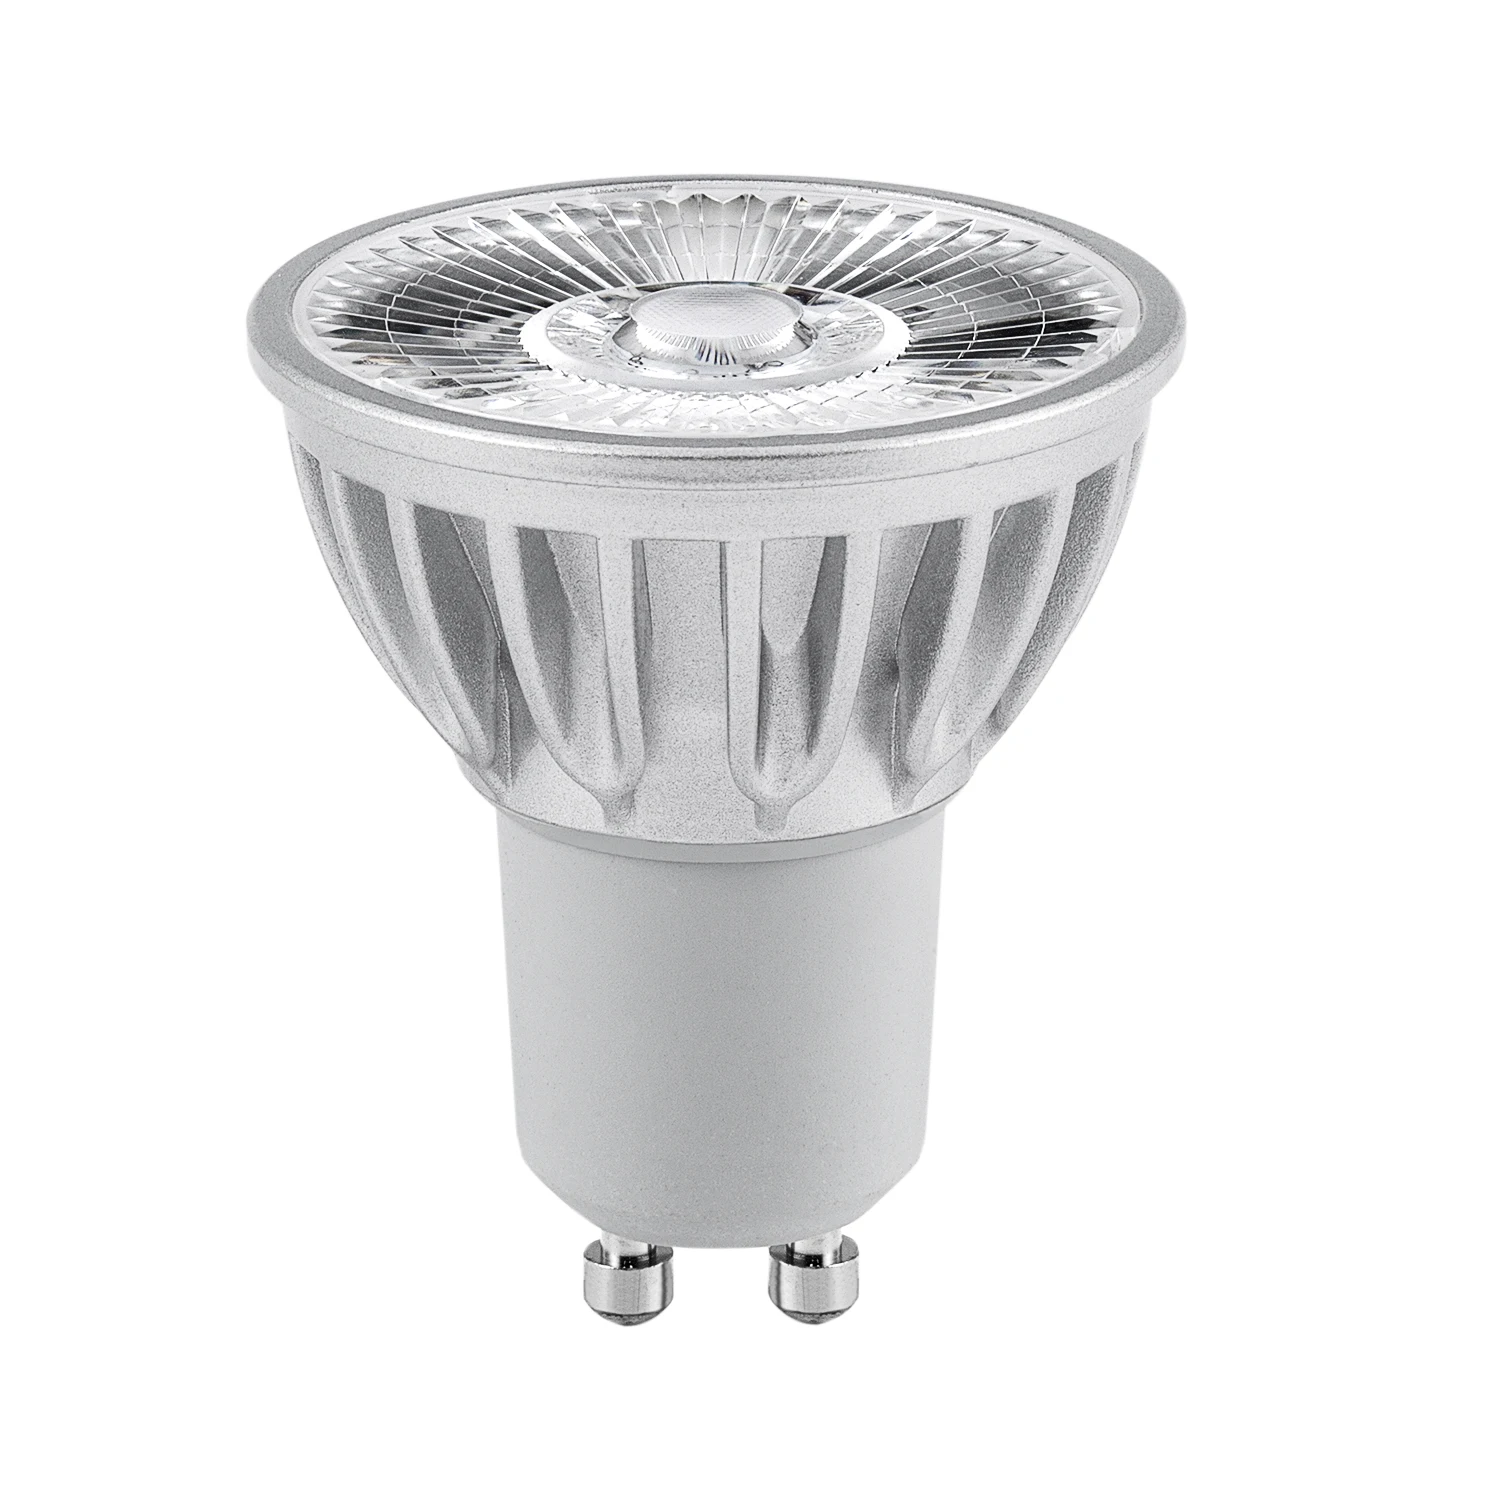 CE ROHS indoor small spotlight mr16 fixture ac12v 110V dimmable GU5.3 pin light bulb 220v cob led gu10 lamps